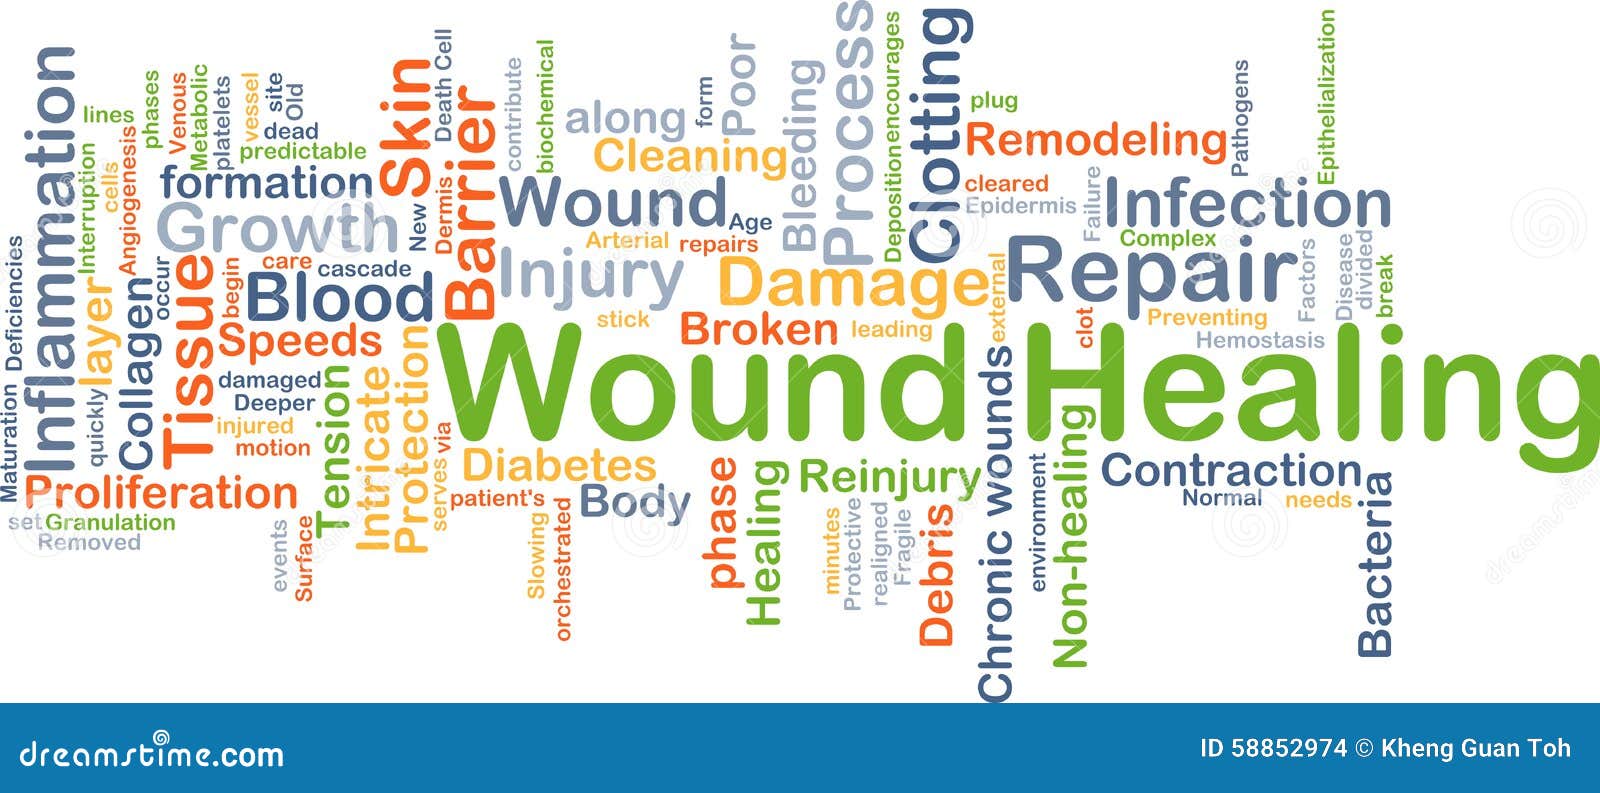 wound healing background concept